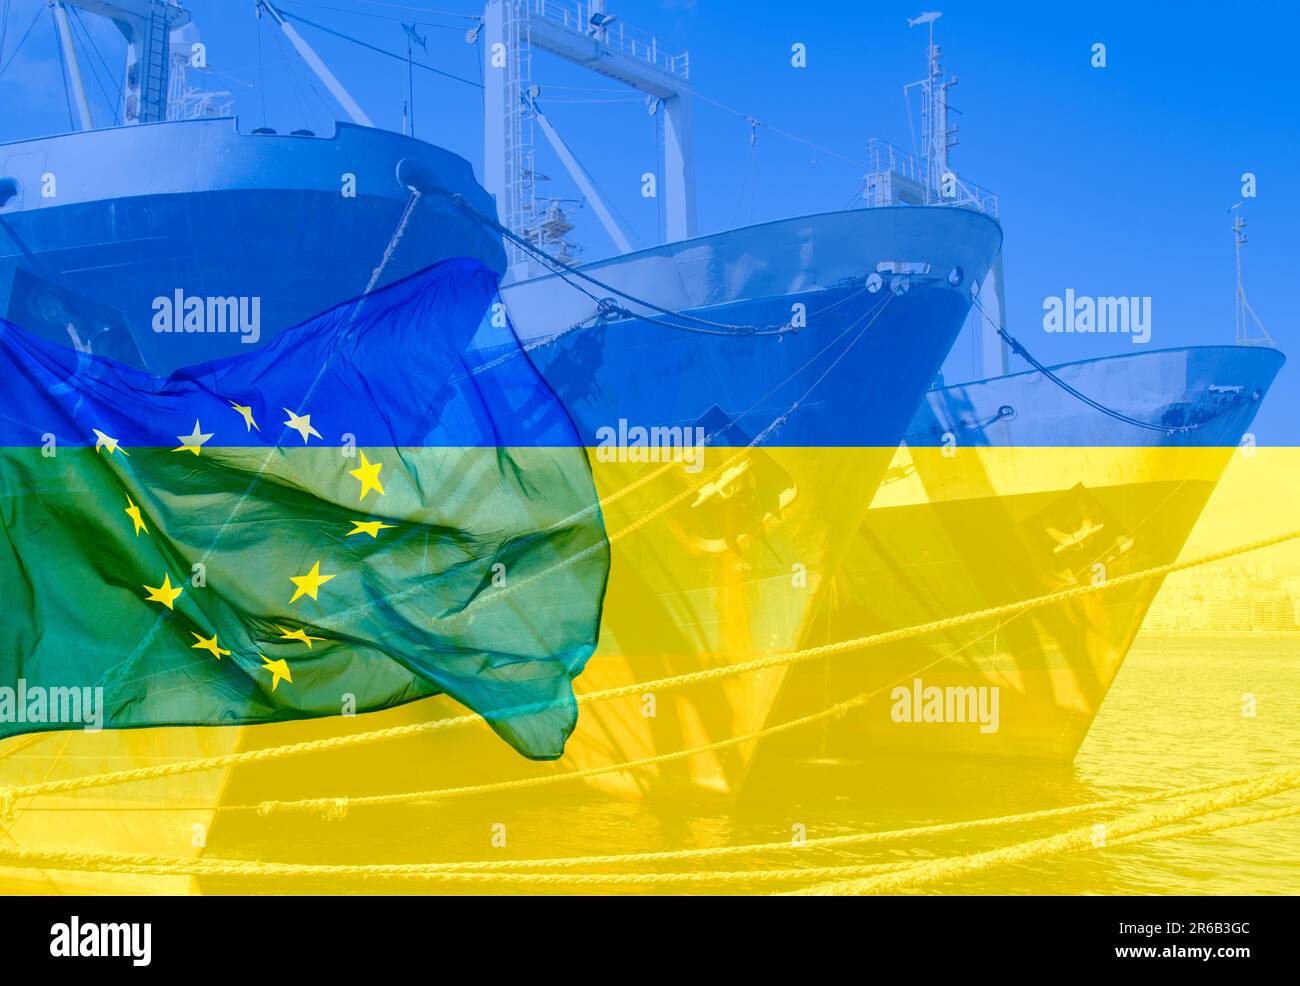 EU, European Union flag over grain ships Ukraine flag. Ukraine, Russia war, world food prices, wheat prices, EU ban...concept Stock Photo